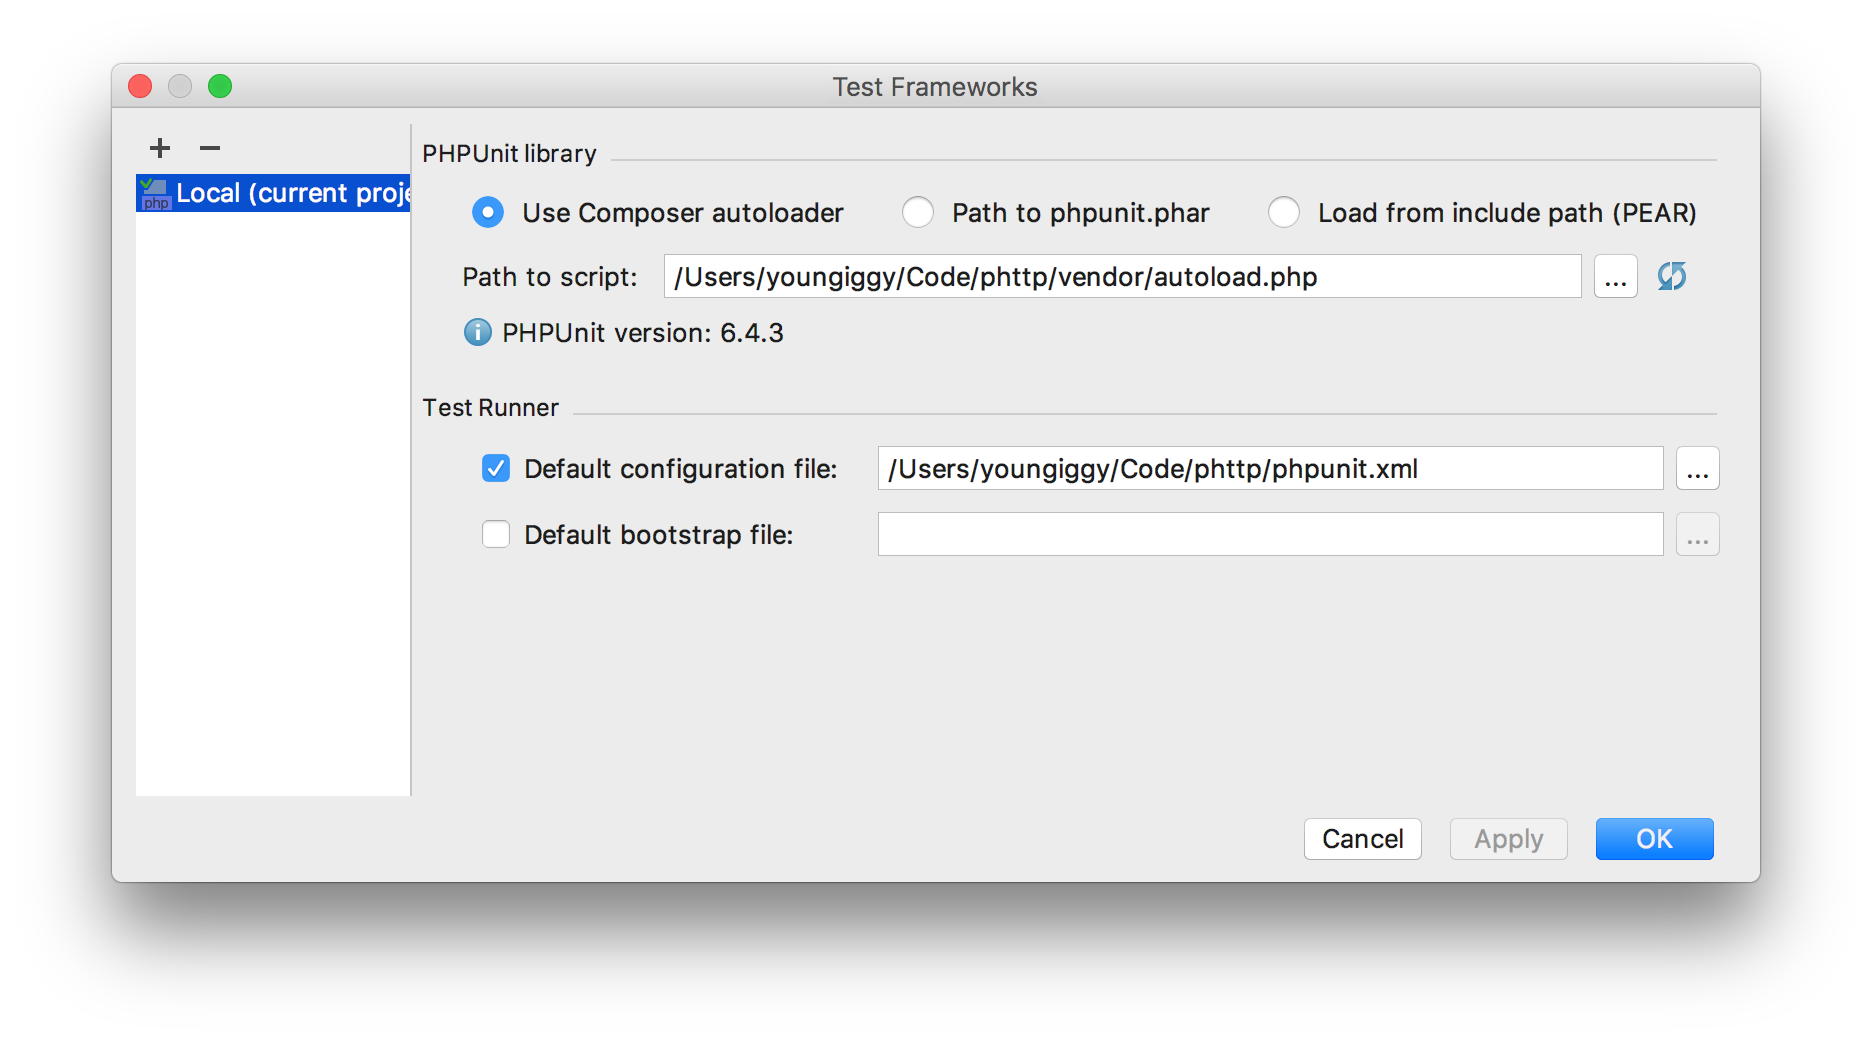 Run > Edit Configurations > Test Frameworks